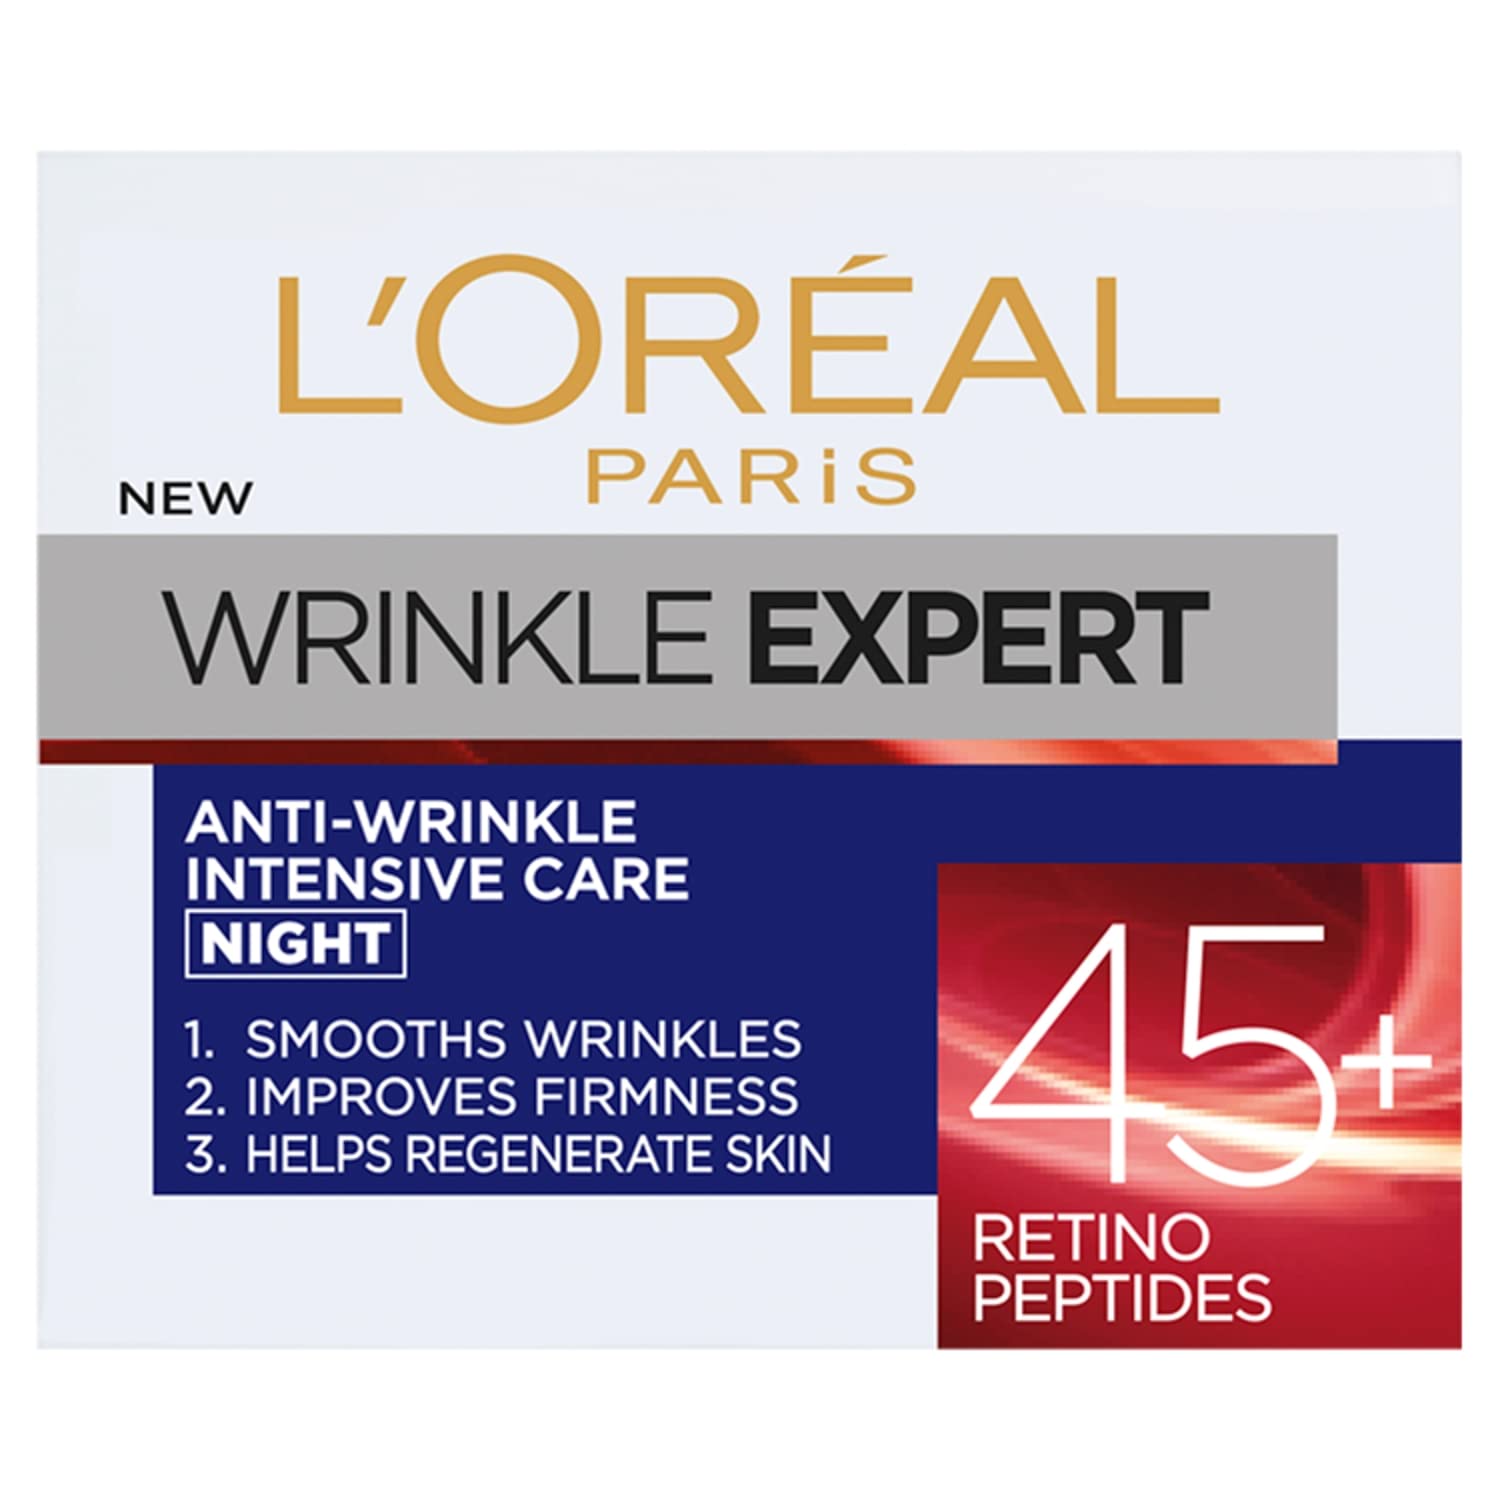 Loreal Anti-Wrinkle Night Face Cream 45+ 50ml